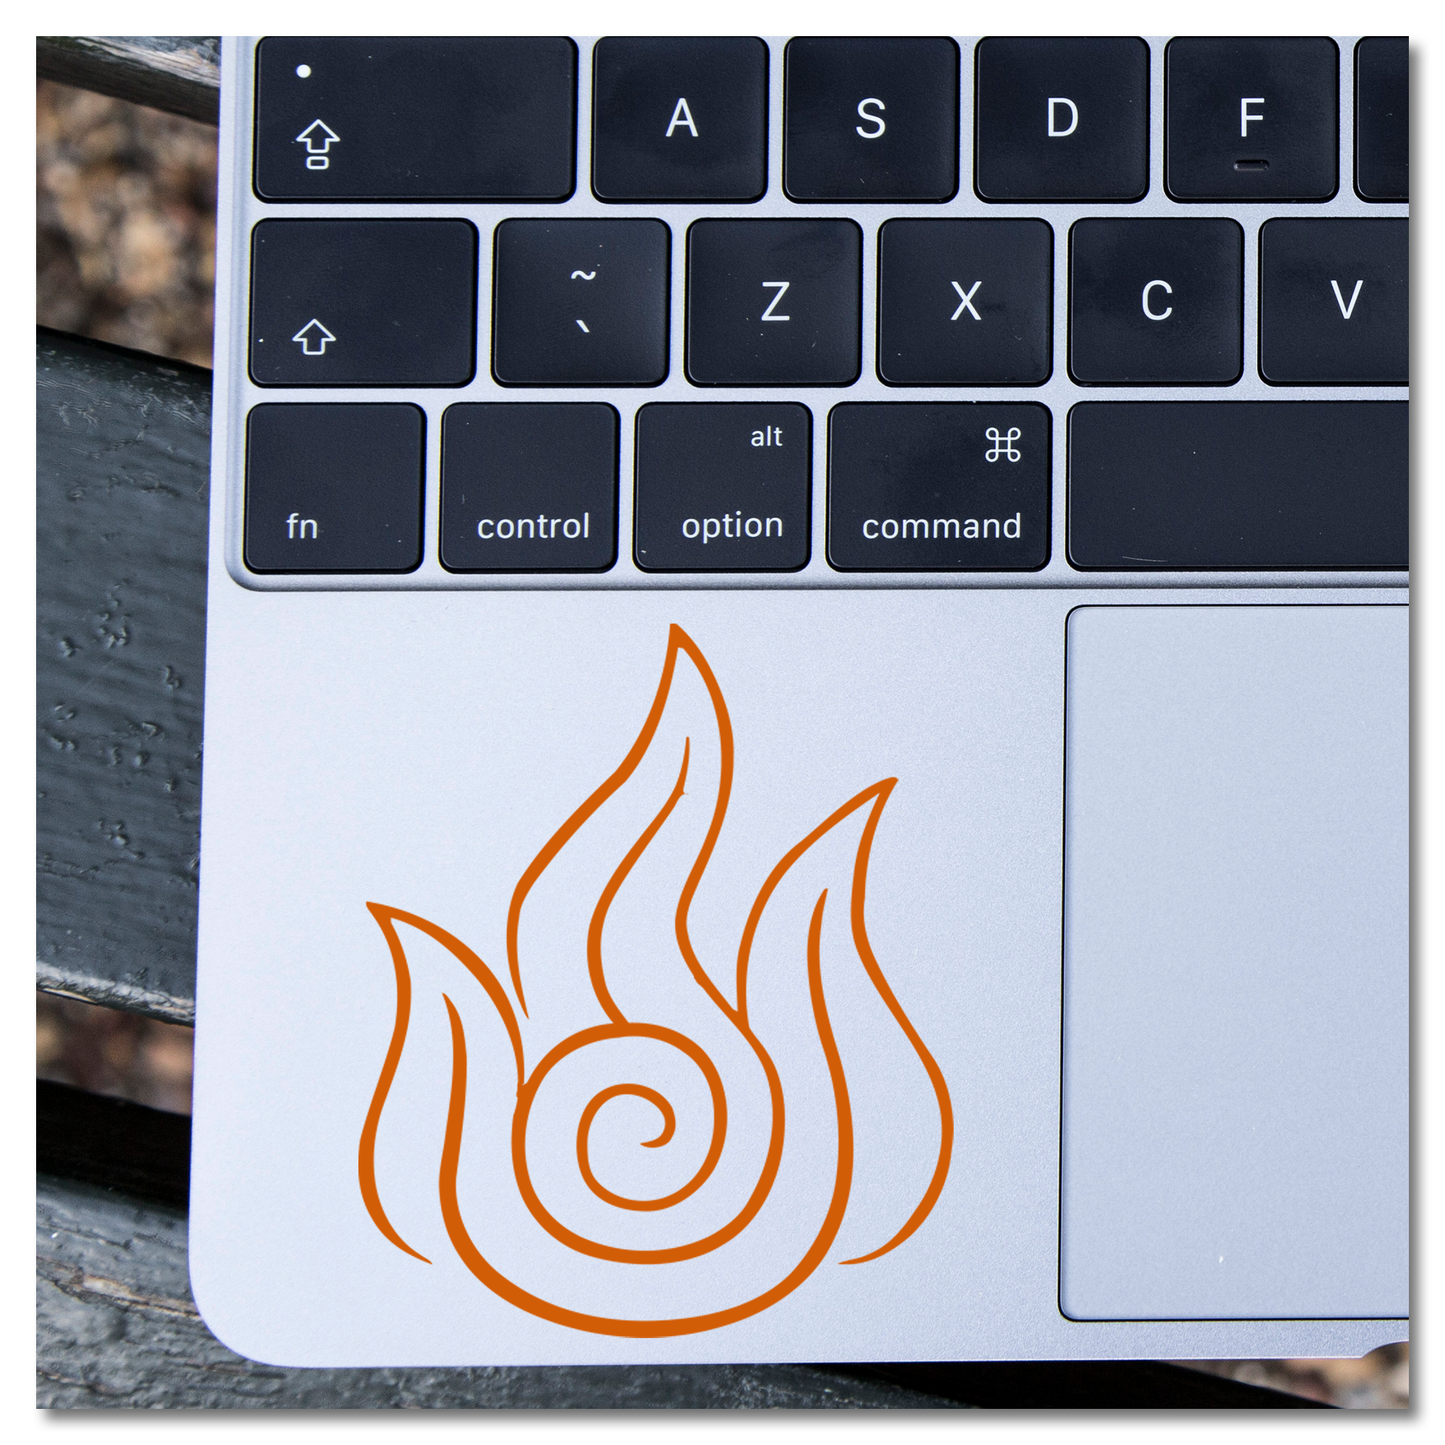 Avatar The Last Airbender Fire Symbol Vinyl Decal Sticker